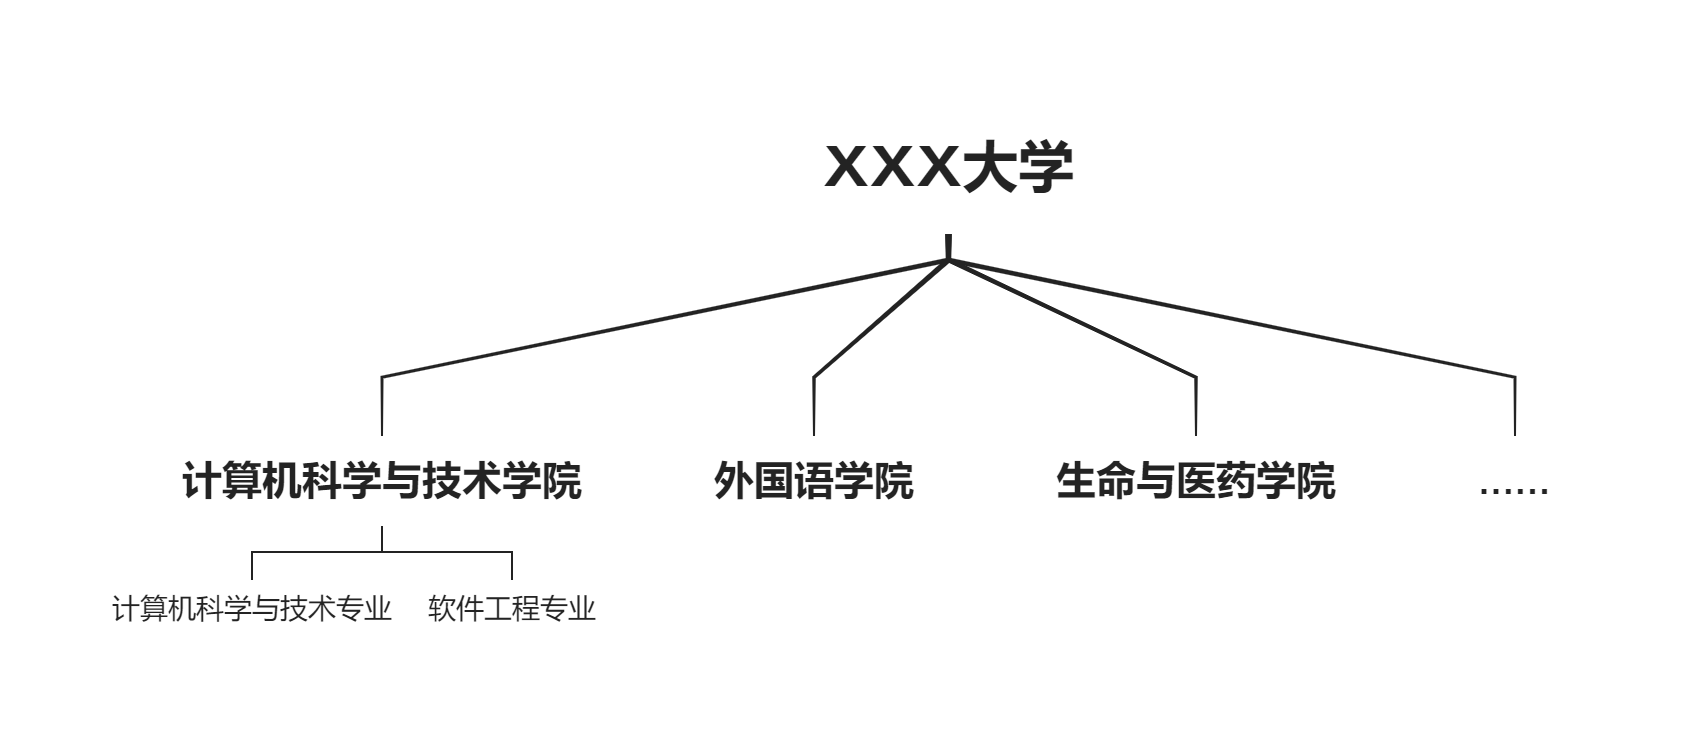 XXX大学组织架构